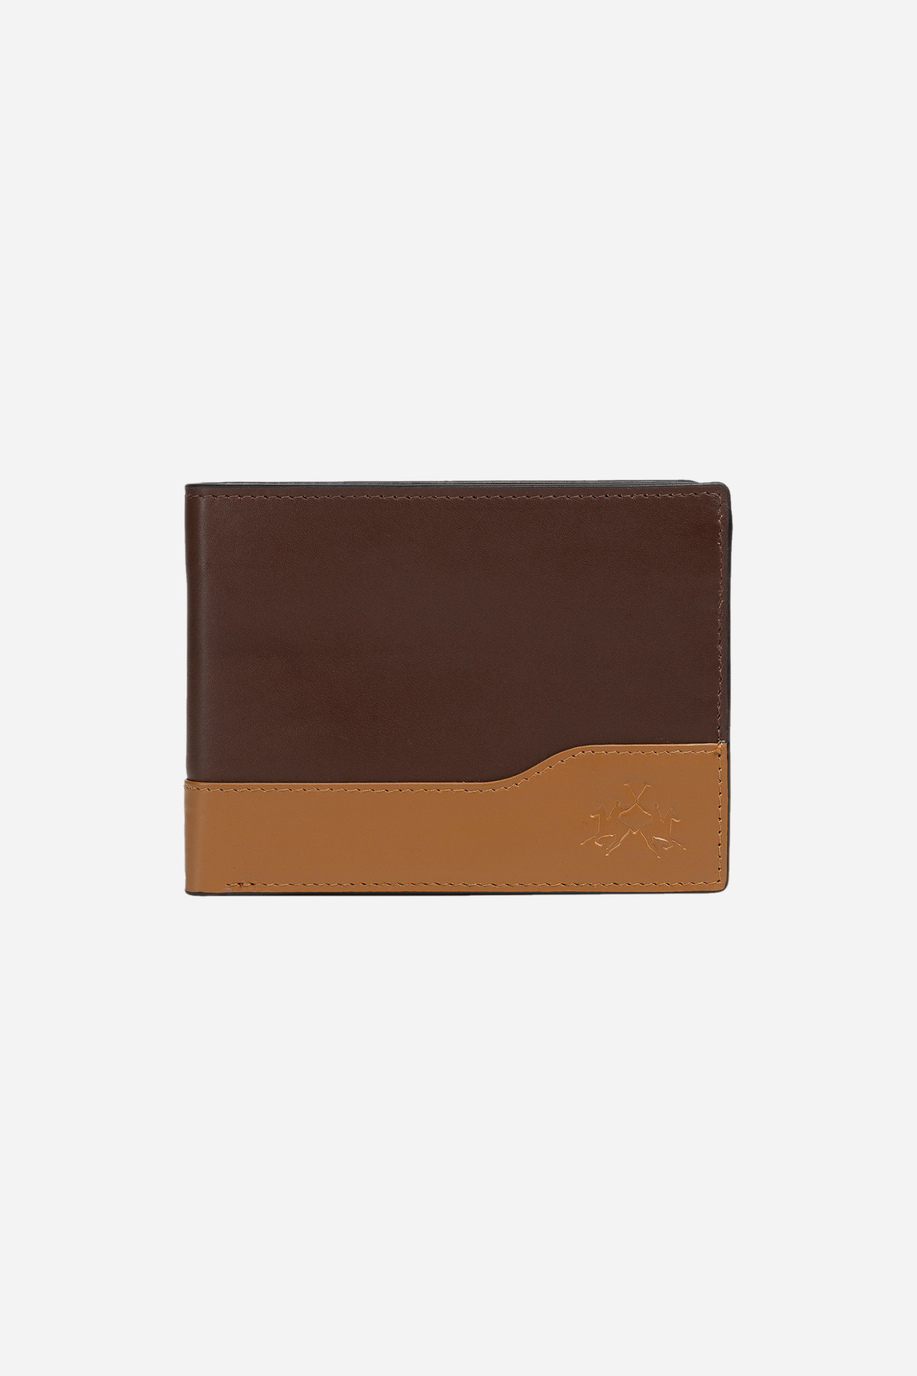 Men's leather wallet - Wallets and key chains | La Martina - Official Online Shop